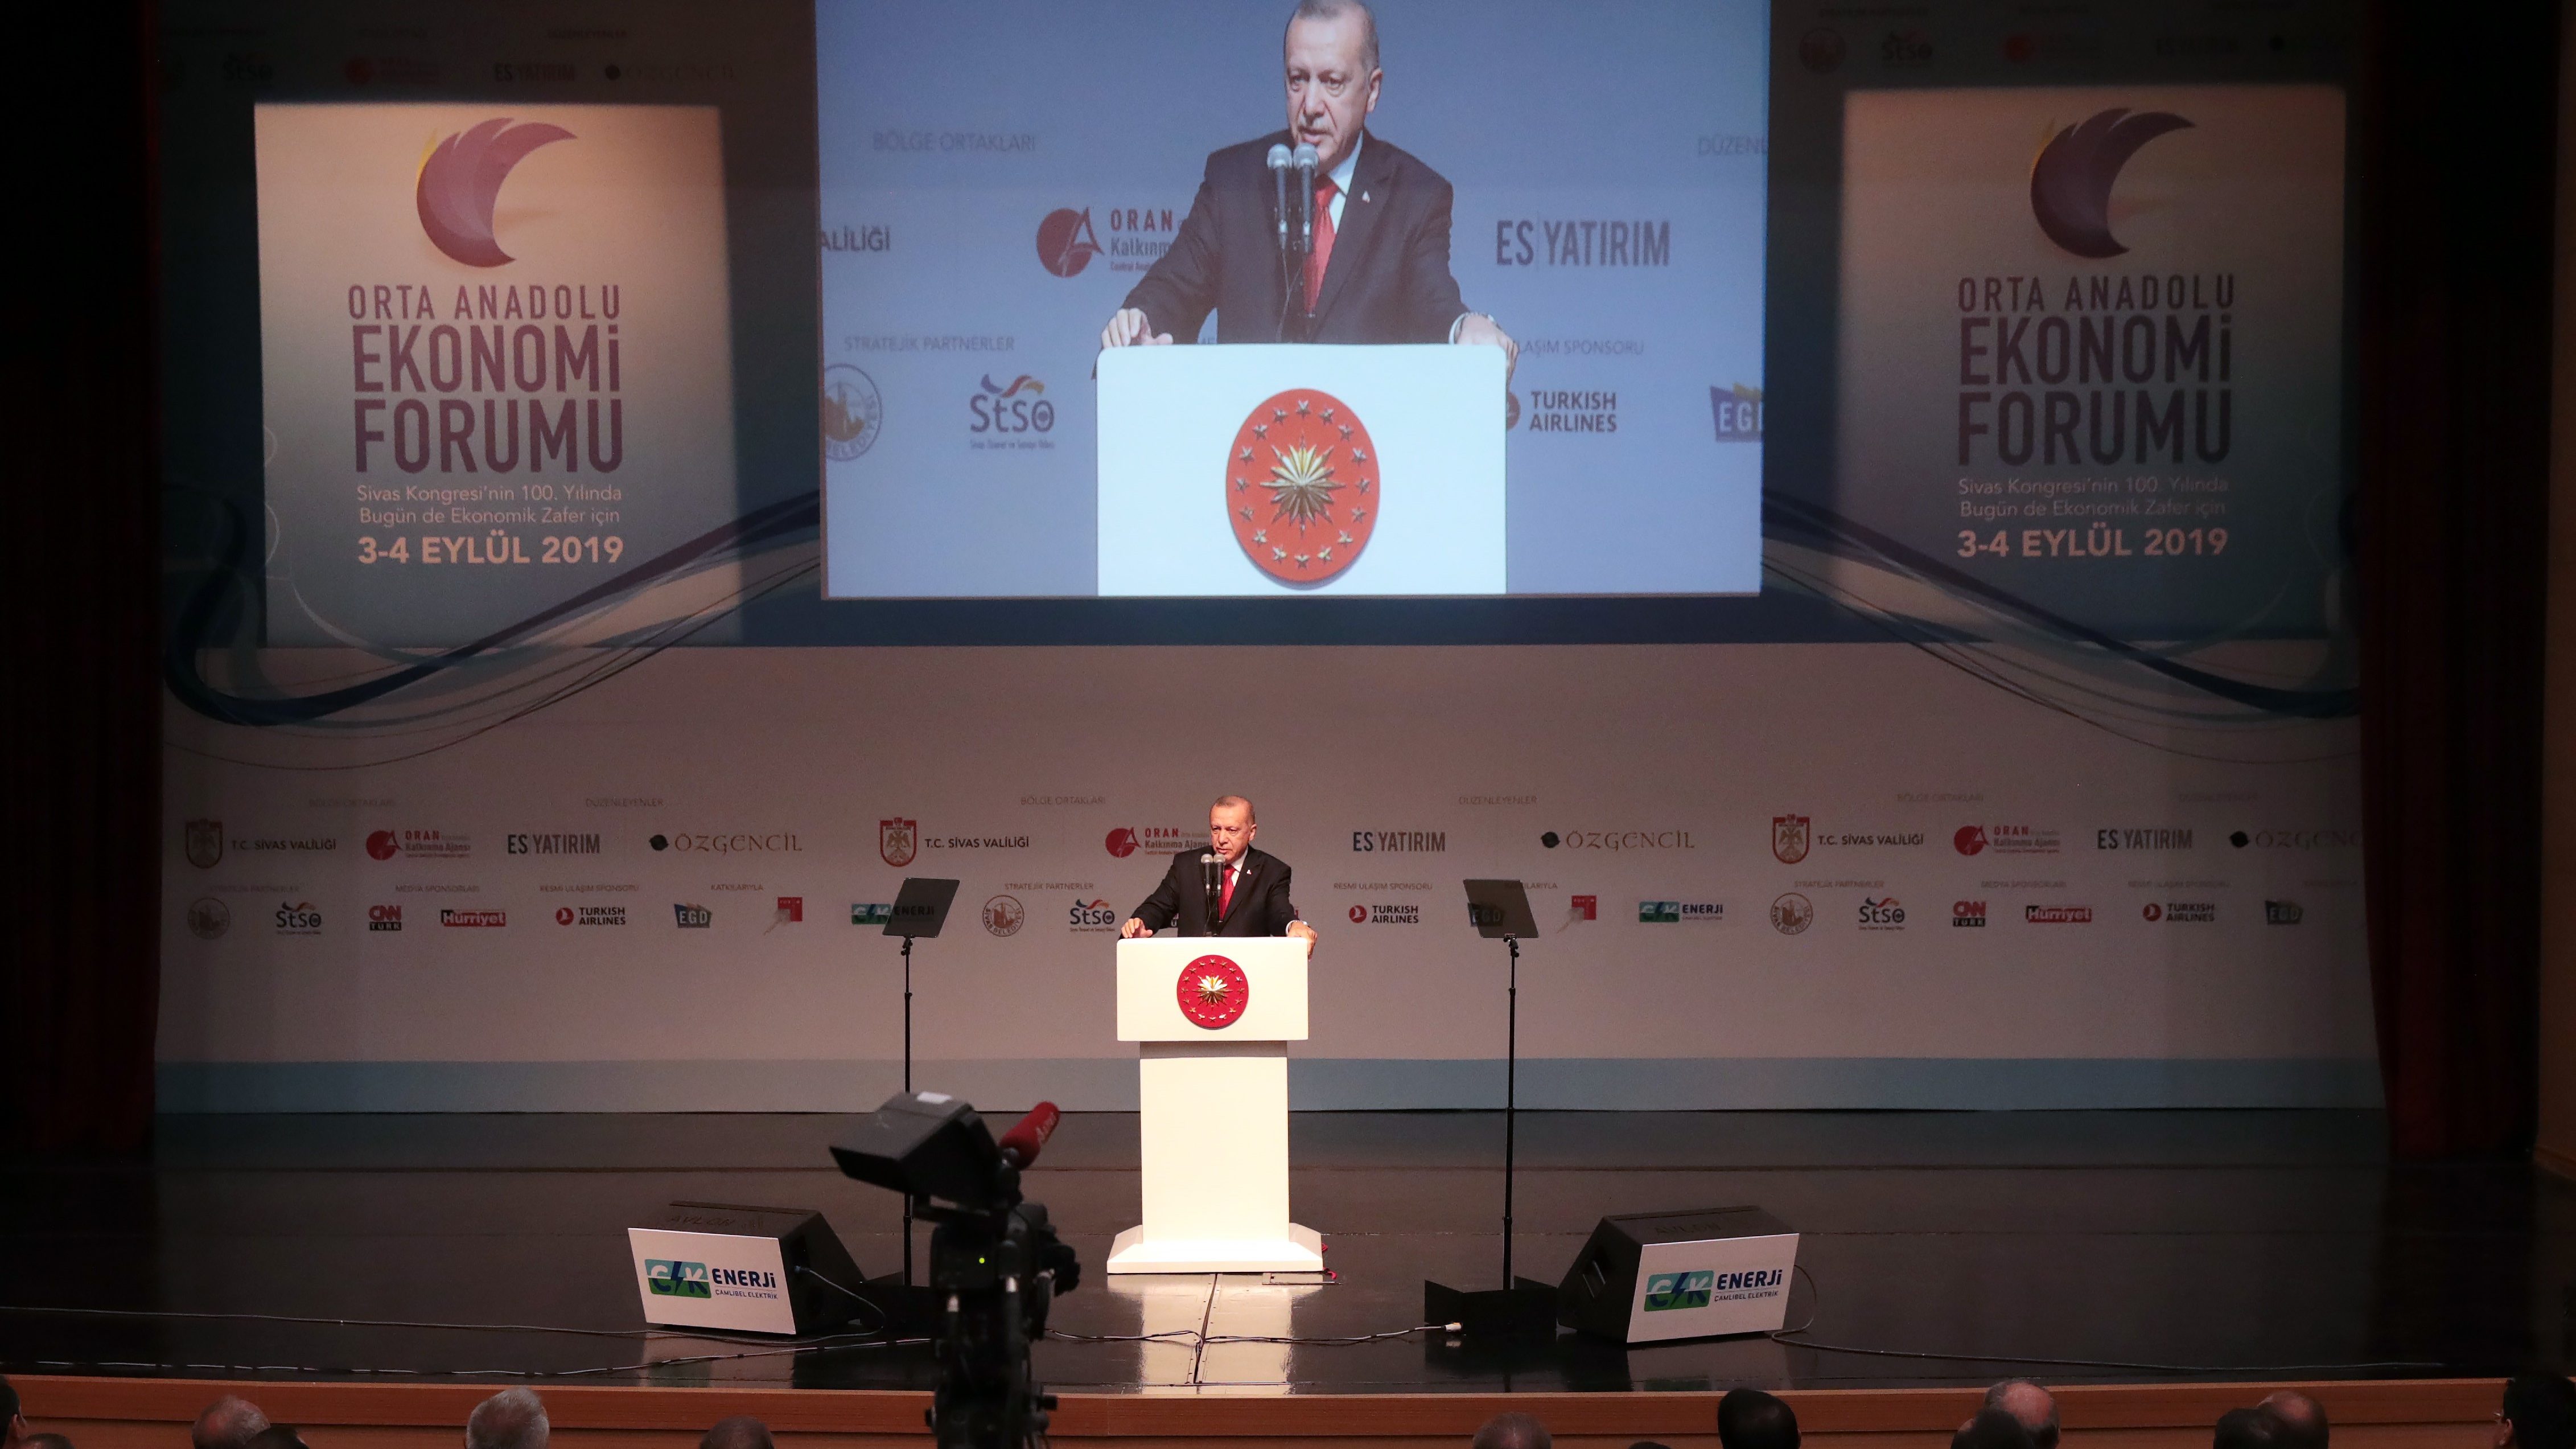 Erdogan: ‘Unacceptable’ that Turkey ‘Can’t Have’ Nukes